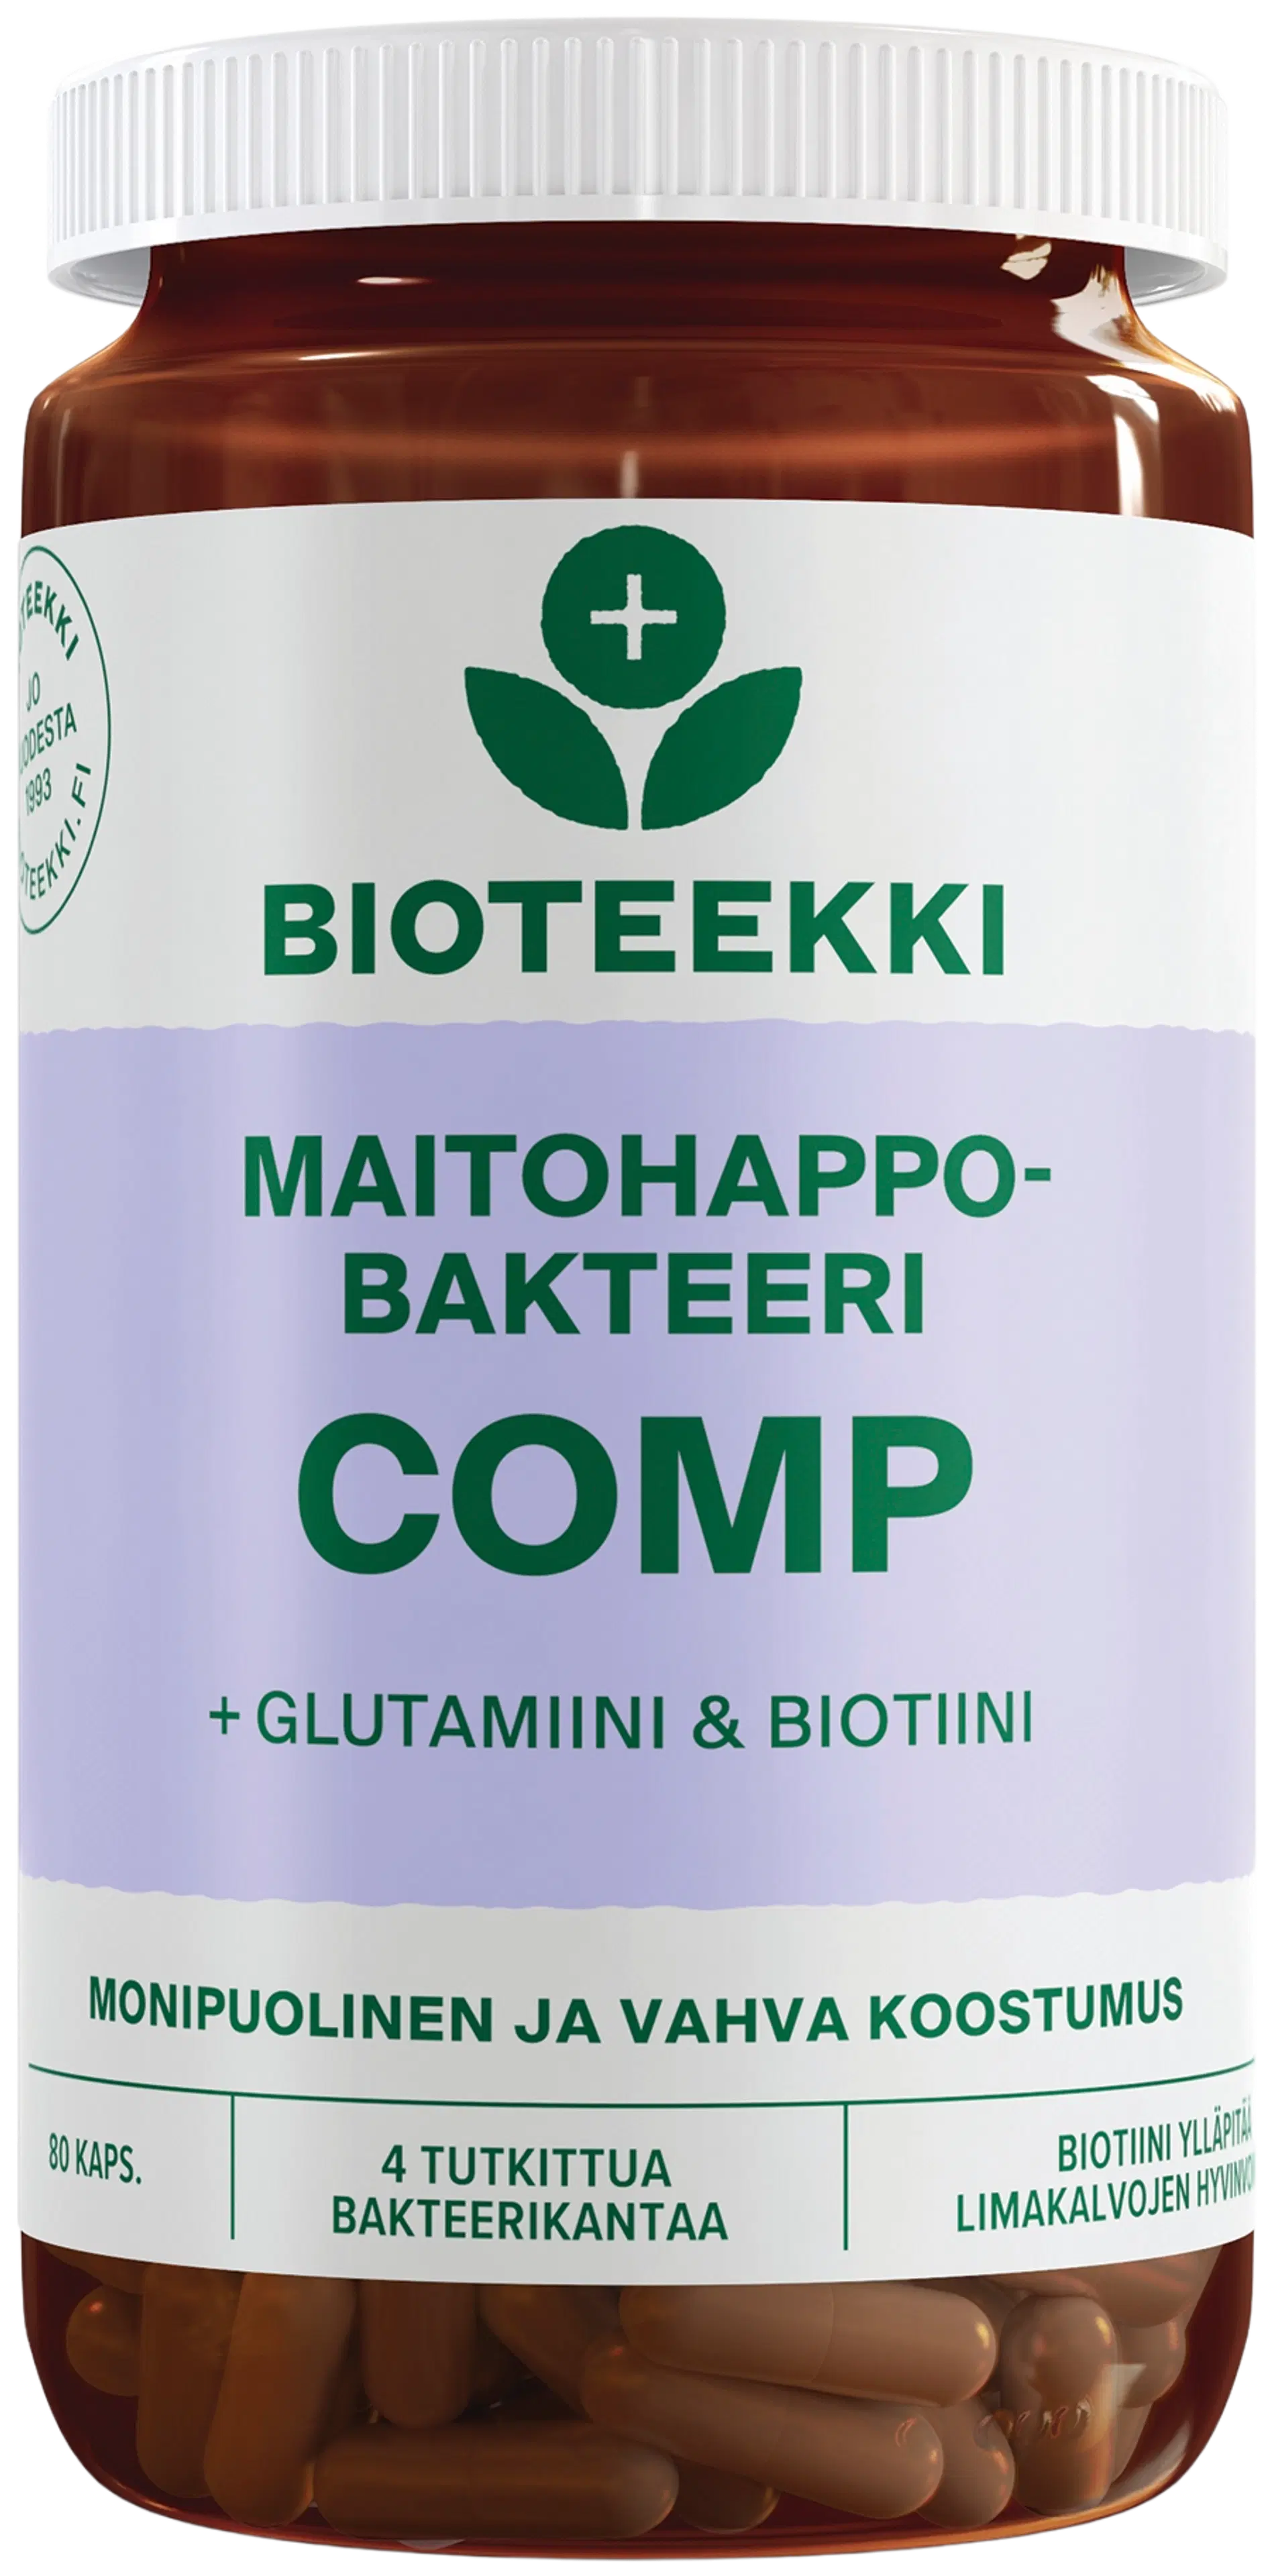 Bioteekki Maitohappobakteeri Comp 80 kaps.